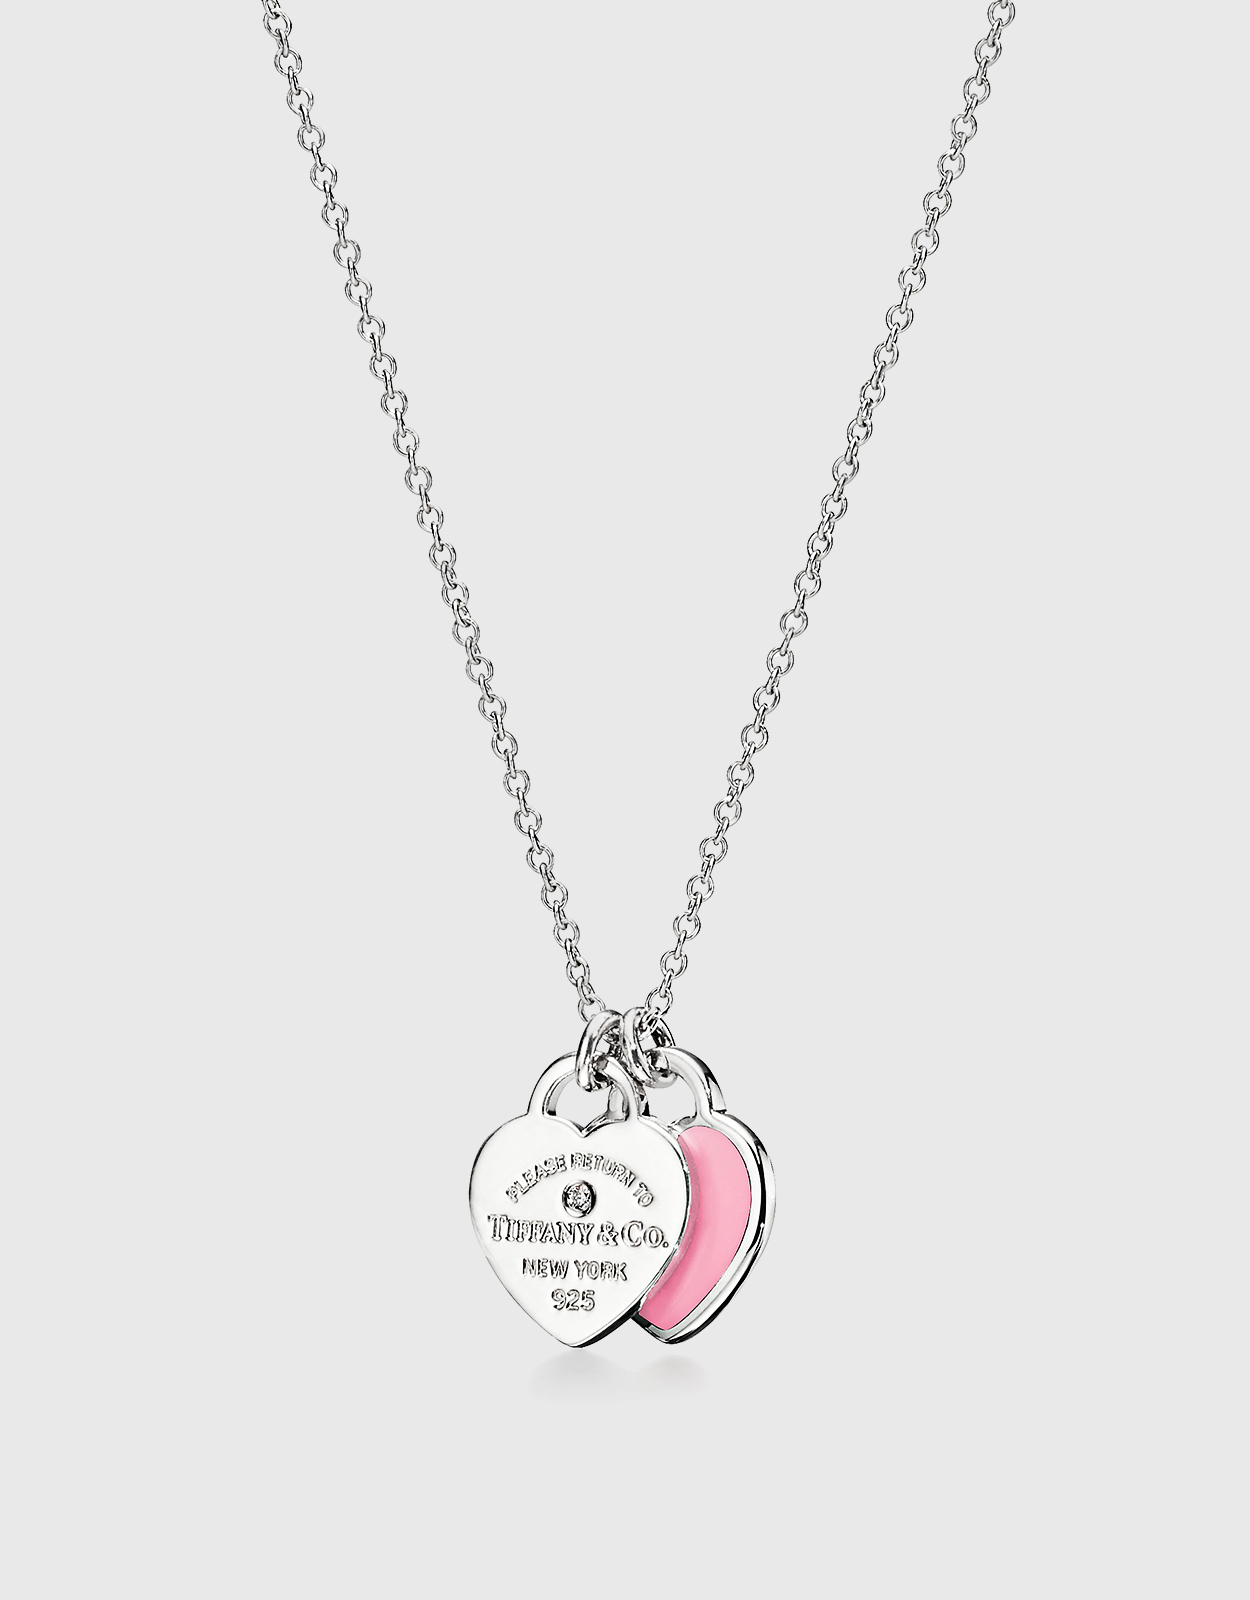 Tiffany & Co. Metro Pink Sapphire 18k White Gold Mini Heart Pendant & Chain  | eBay